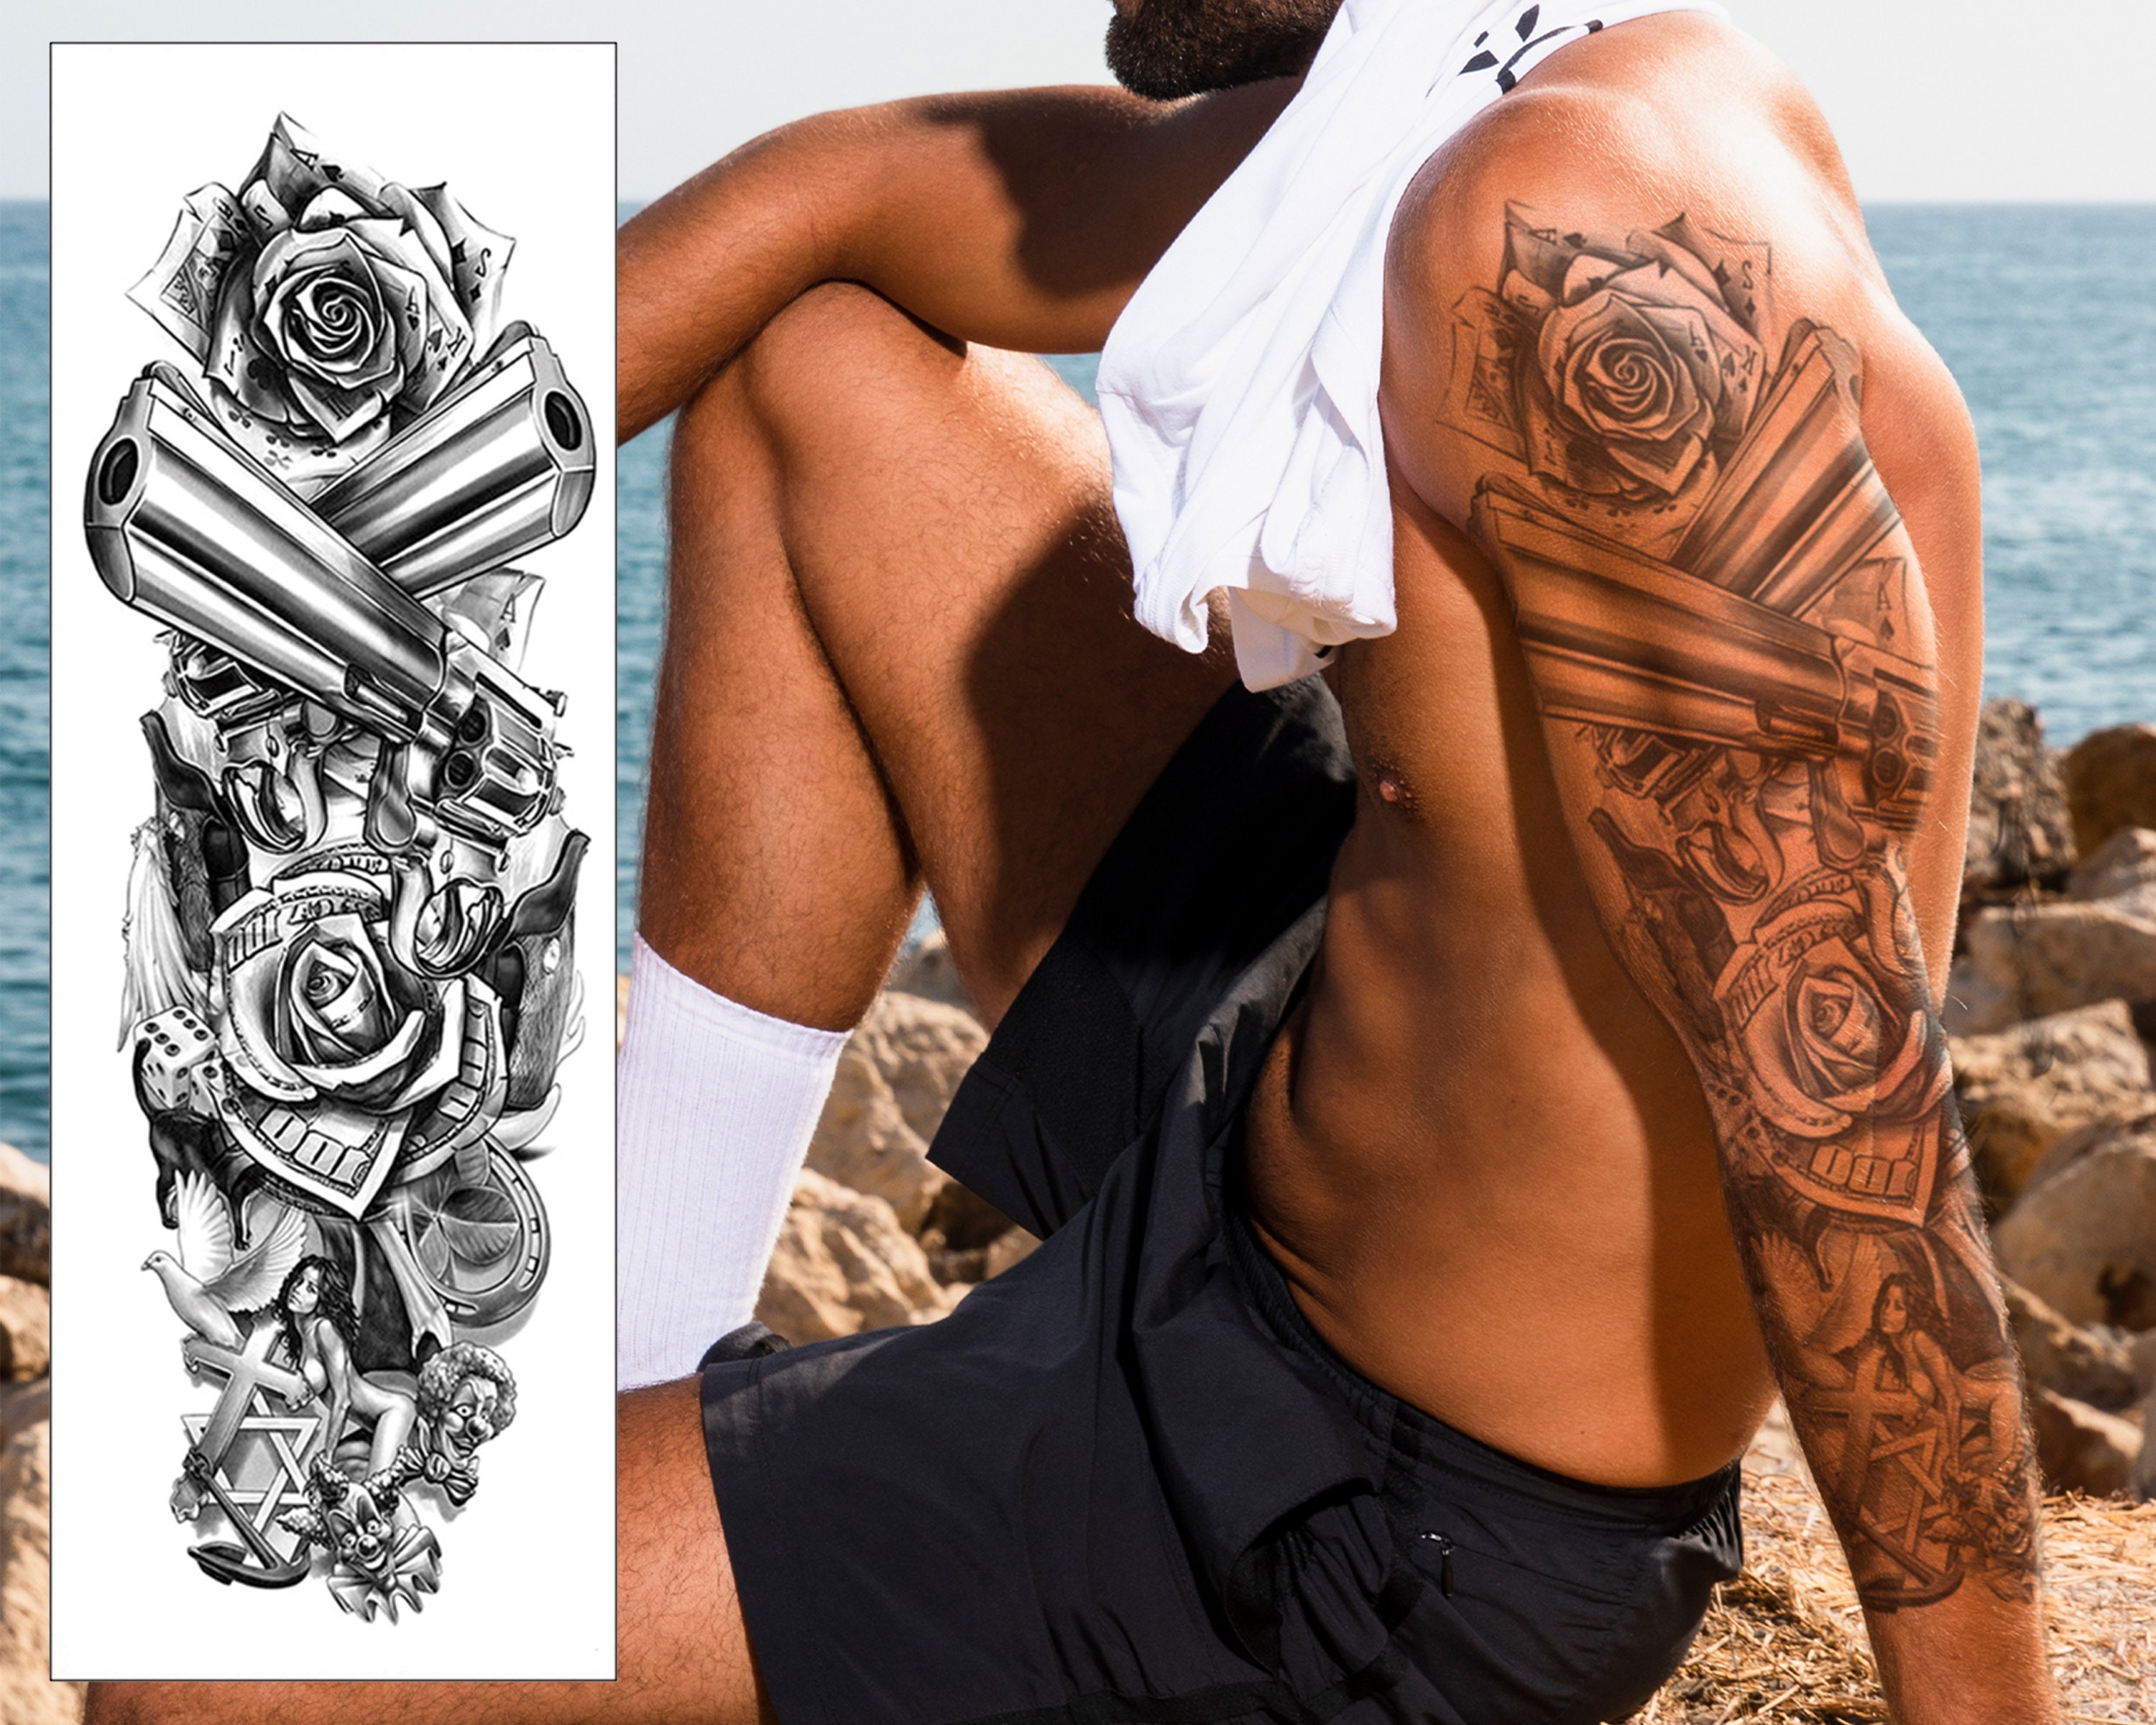 Fake Temporary Tattoo Sleeve Nylon Arm Stocking Black Gangster